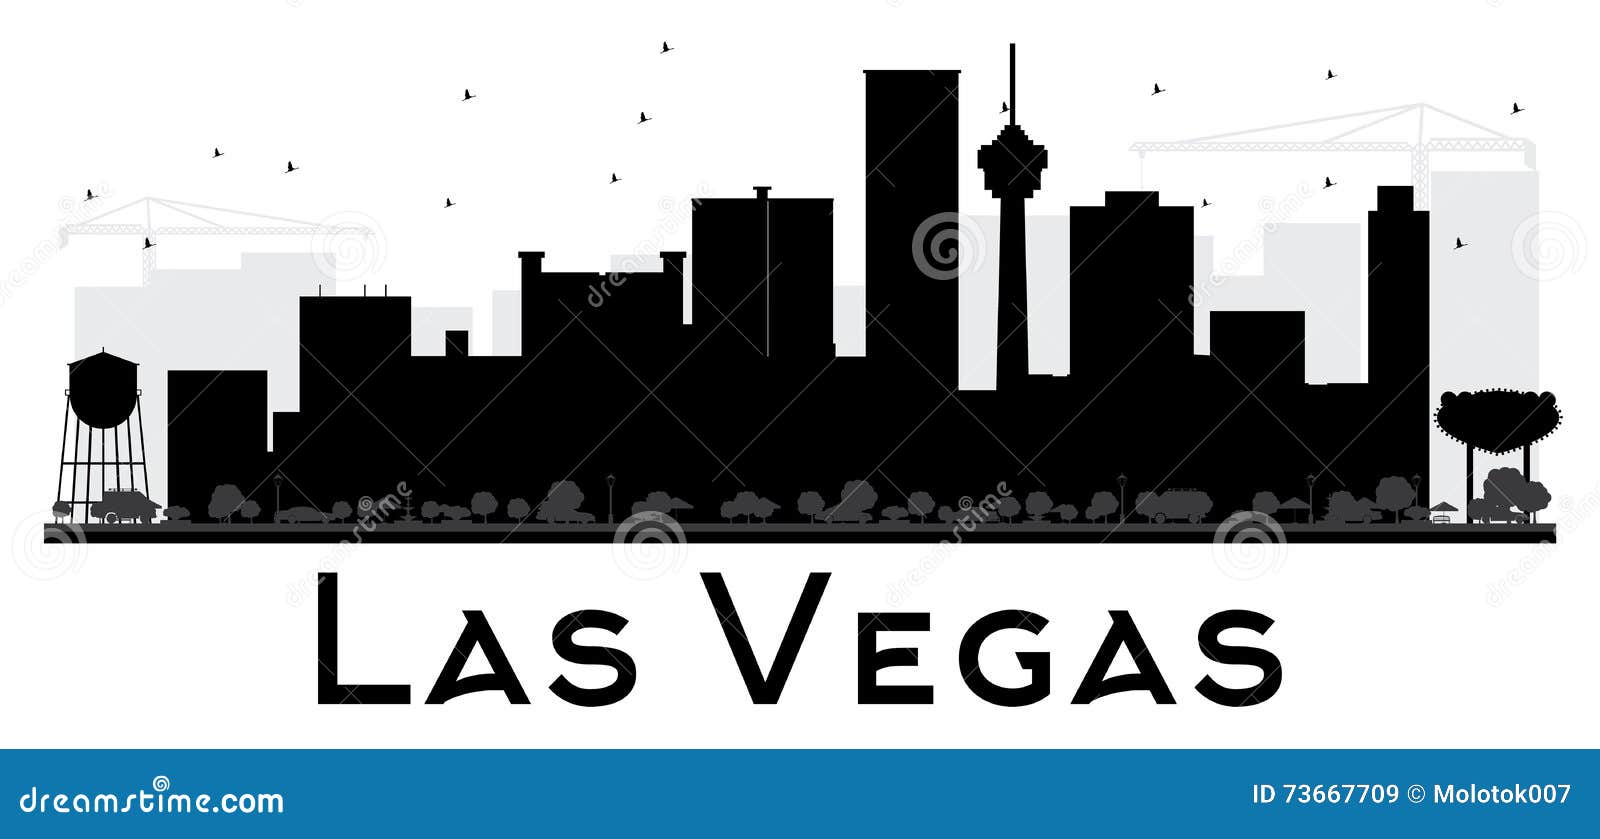 Las Vegas City Skyline Horizontal Banner. Black And White